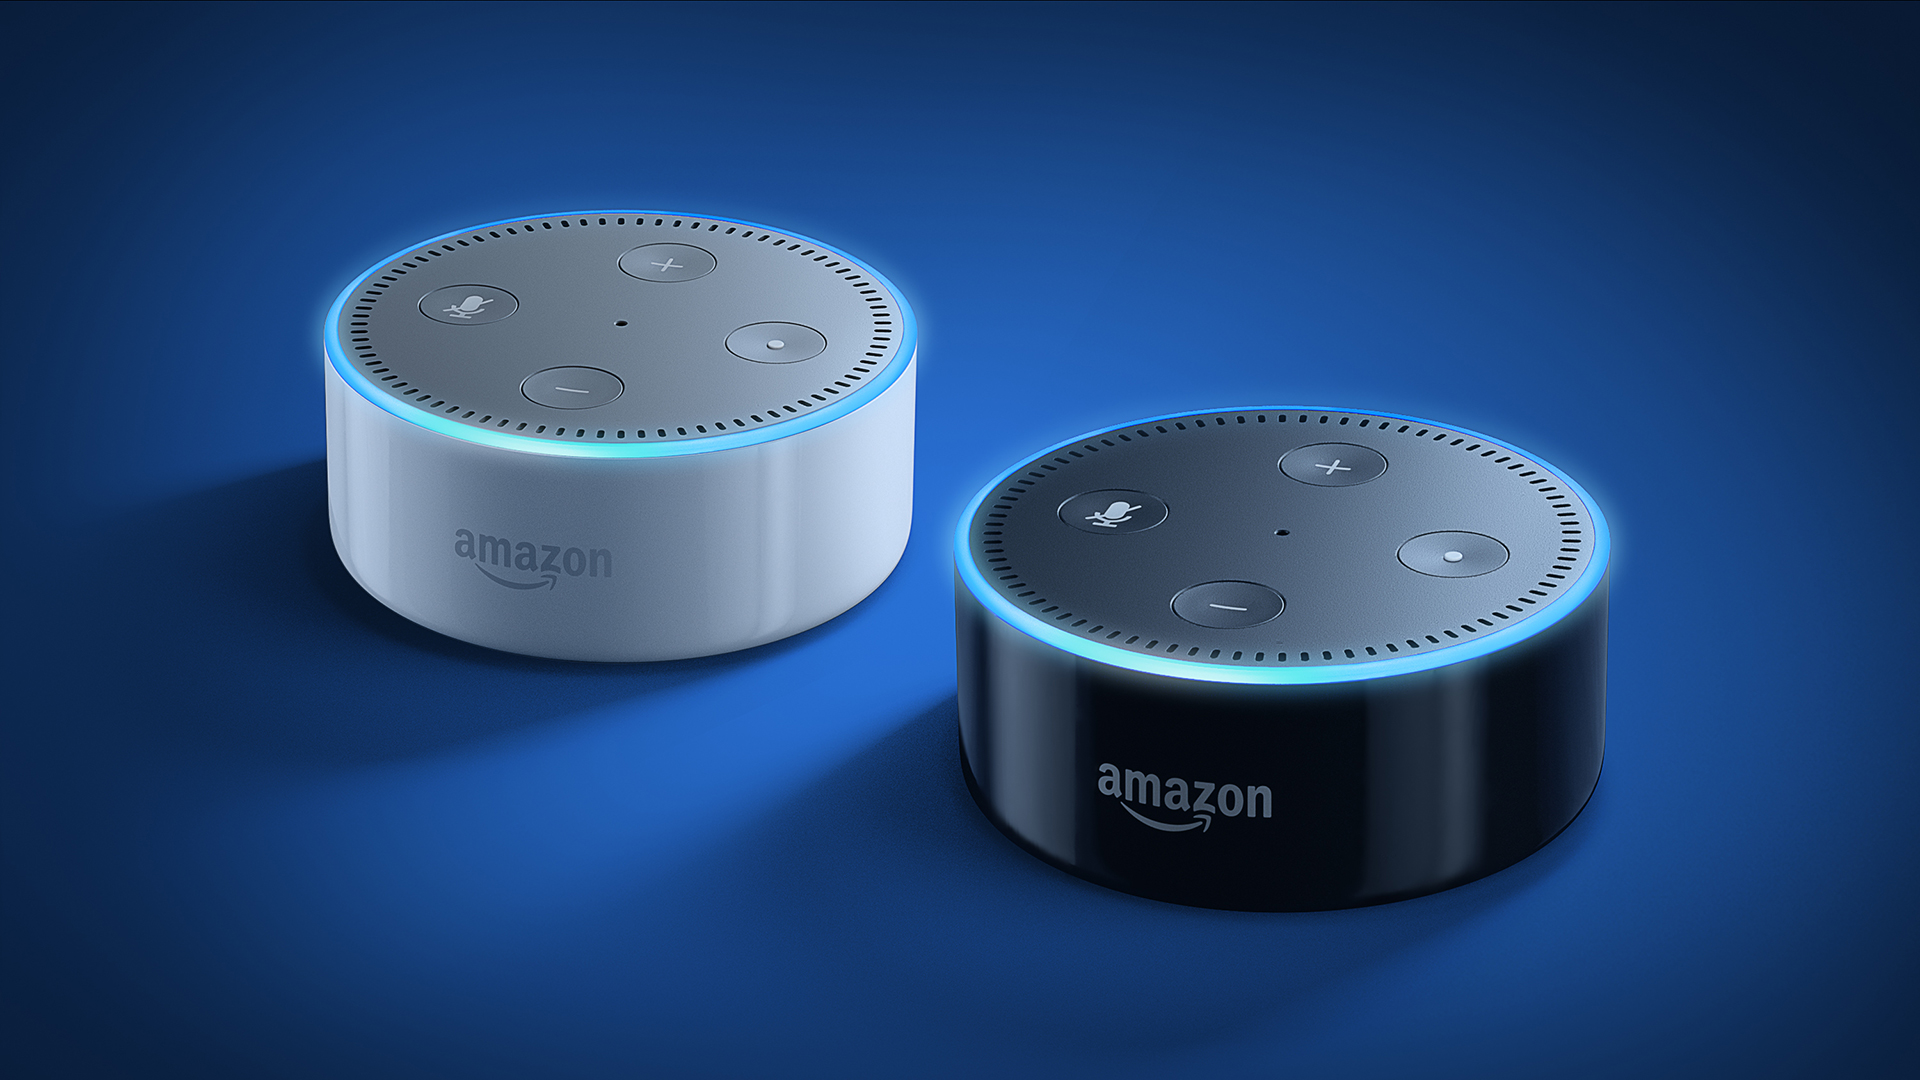 Amazon's Echo Dot, the best-selling item on Amazon.com this holiday season.